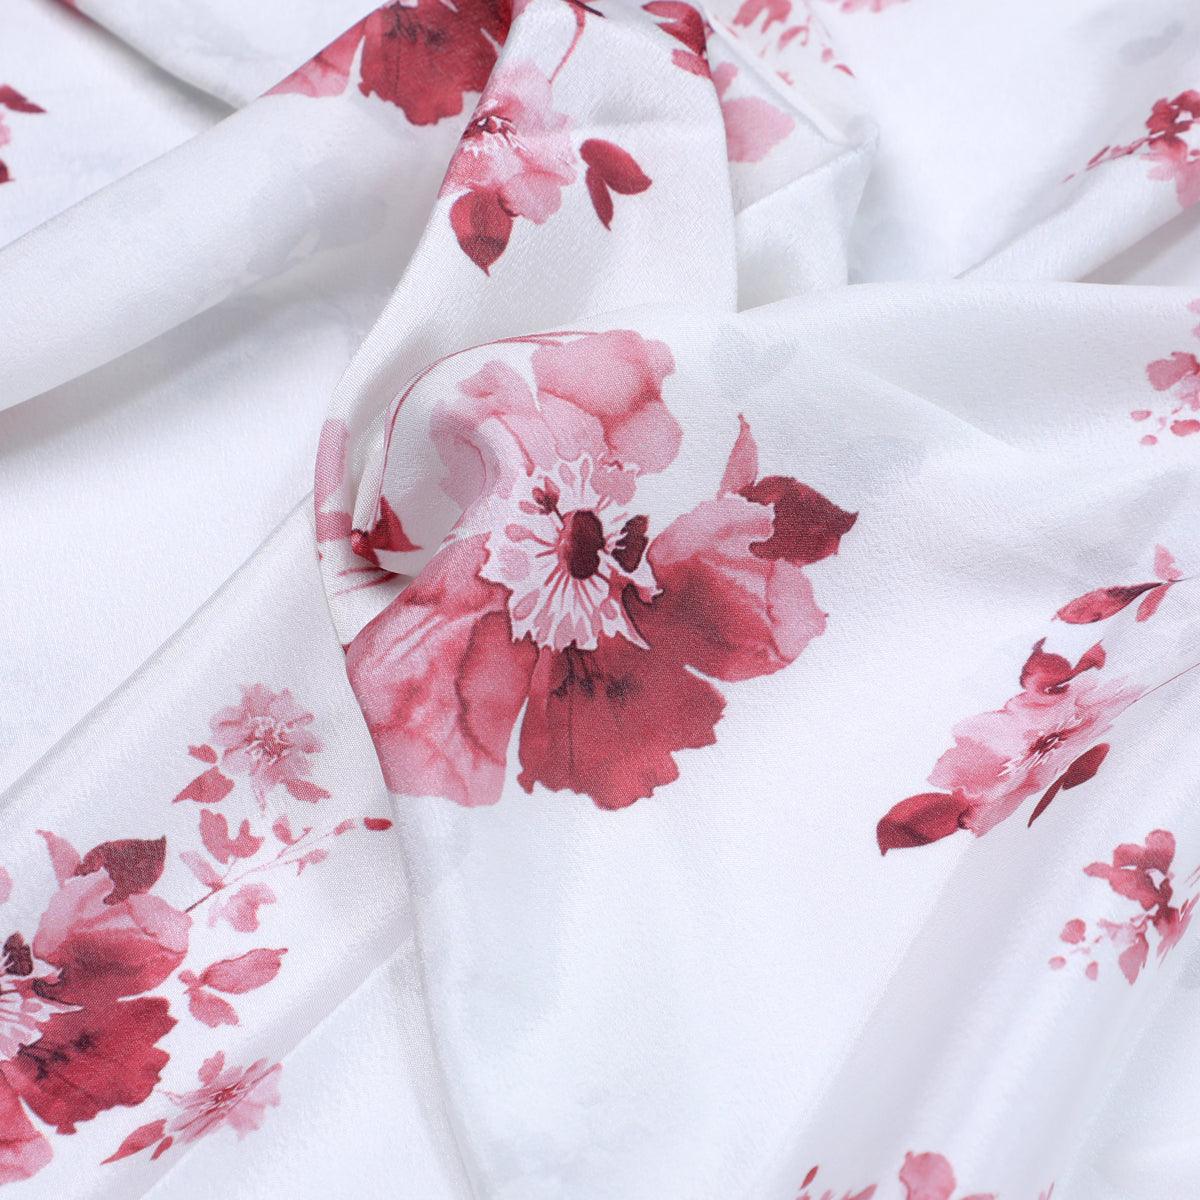 Maroon Flower Bunch Digital Printed Fabric - Crepe - FAB VOGUE Studio®